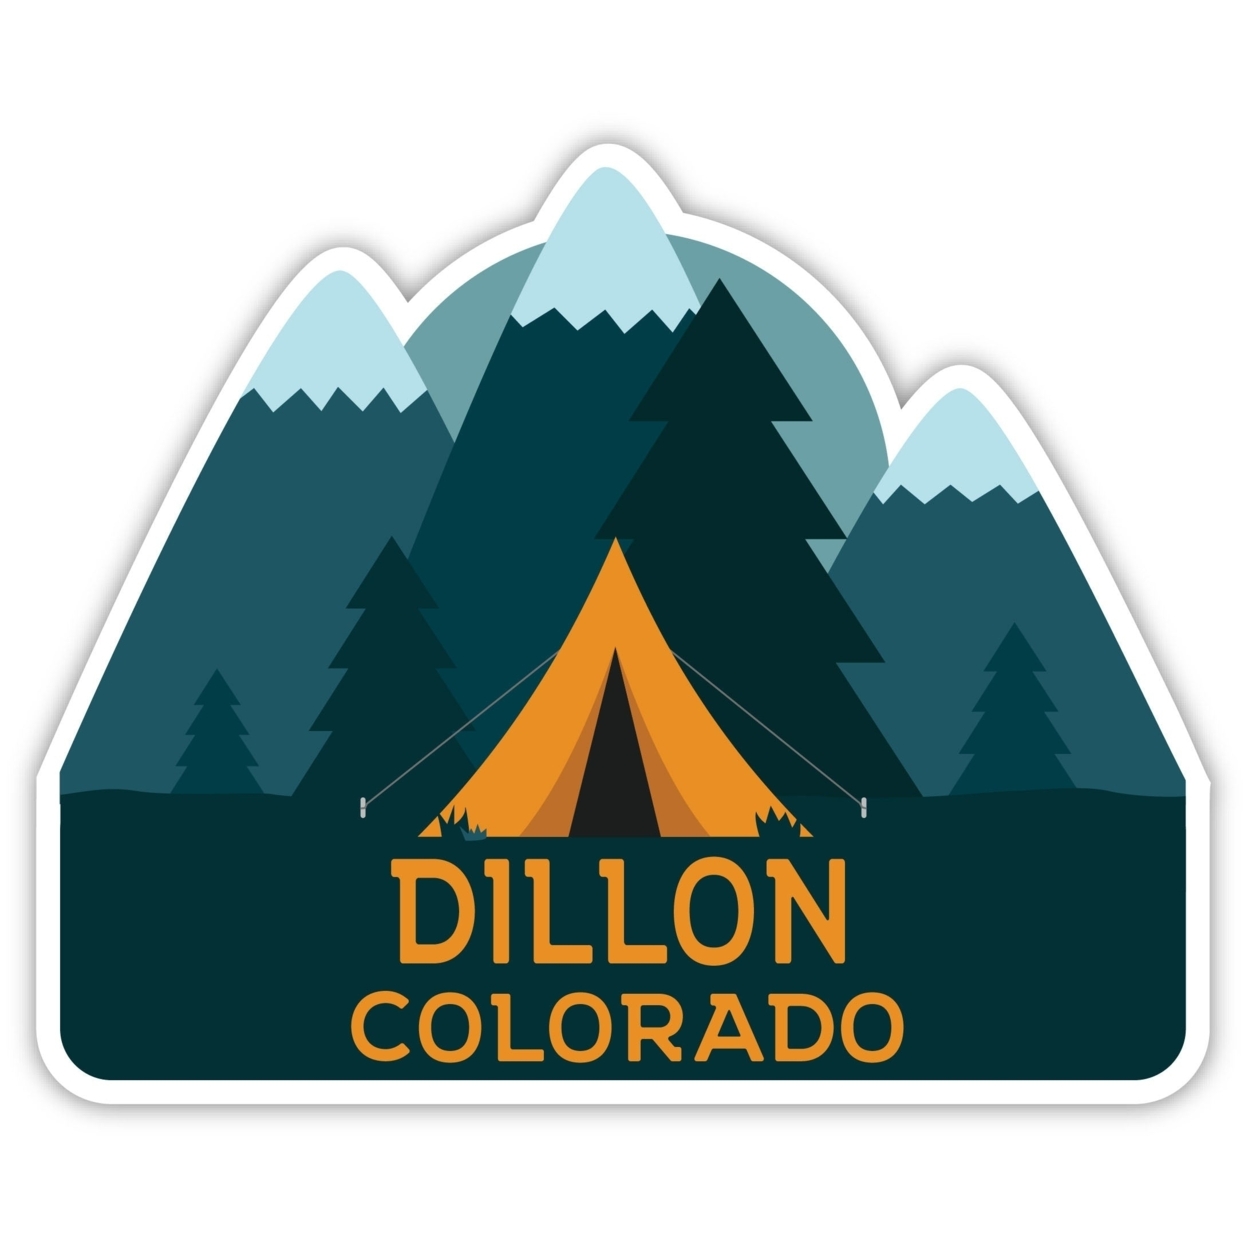 Dillon Colorado Souvenir Decorative Stickers (Choose Theme And Size) - Single Unit, 8-Inch, Camp Life